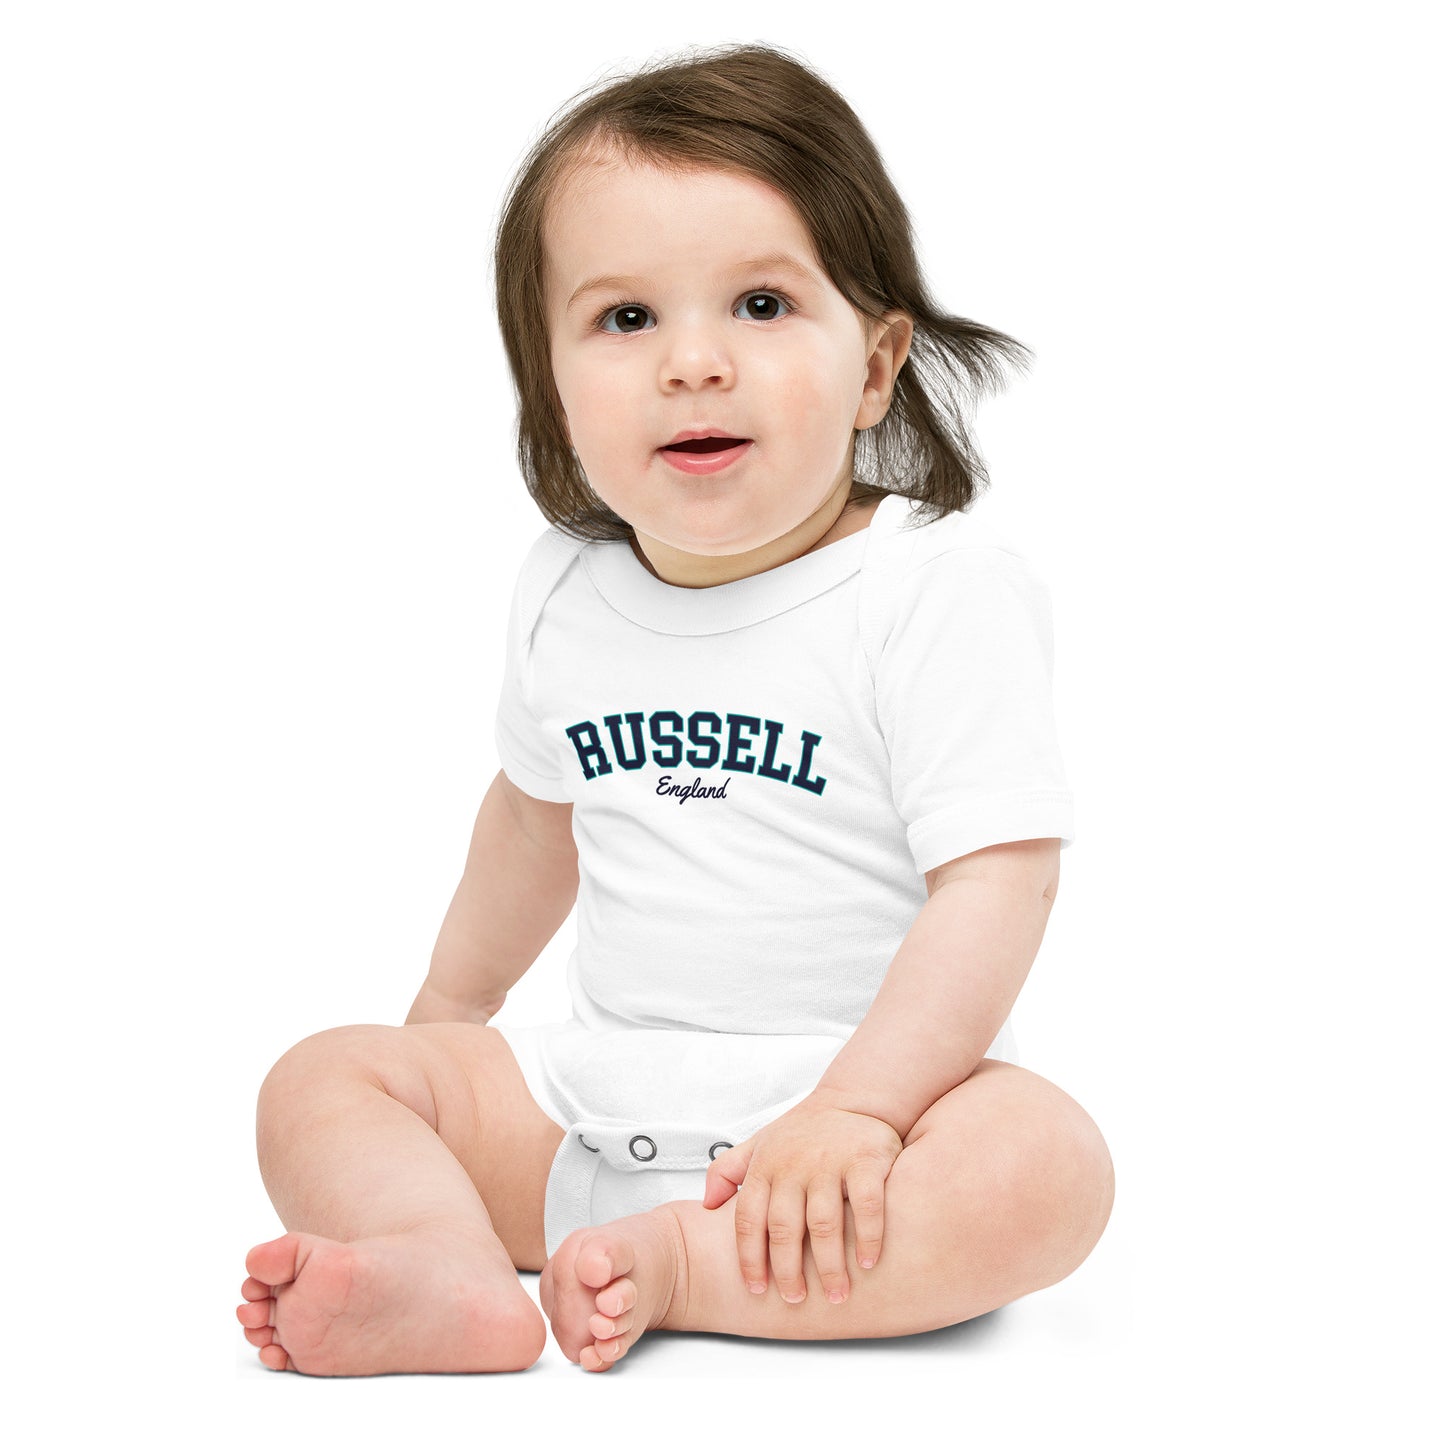 Russell Baby Onesie